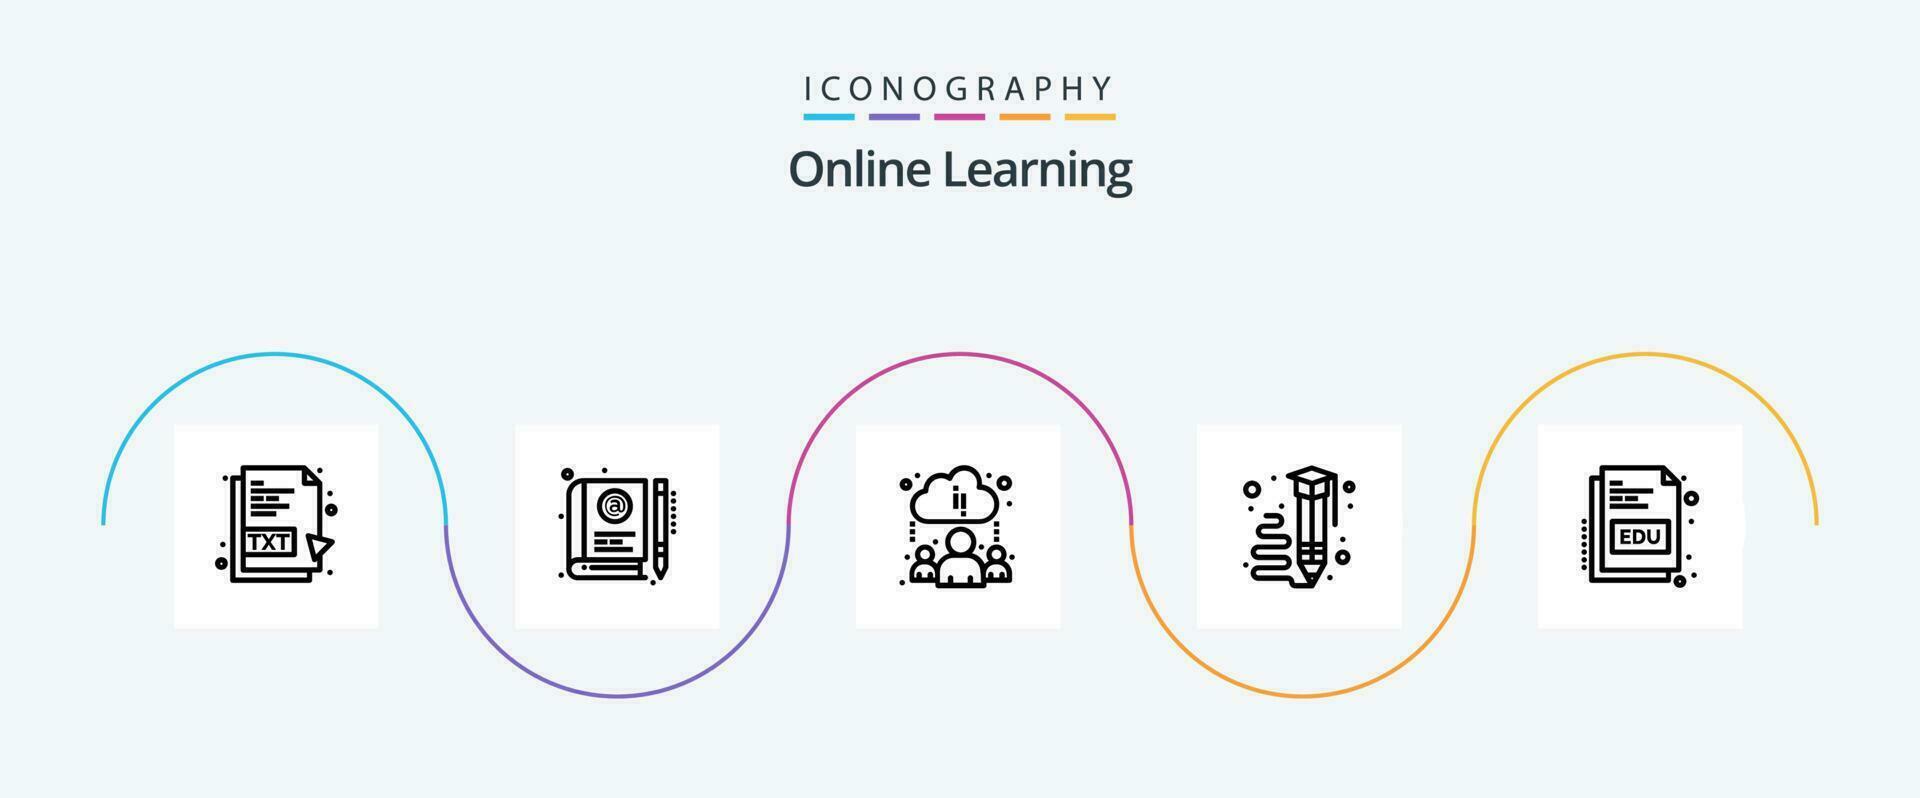 en ligne apprentissage ligne 5 icône pack comprenant livre. crayon. apprentissage. apprentissage. art vecteur